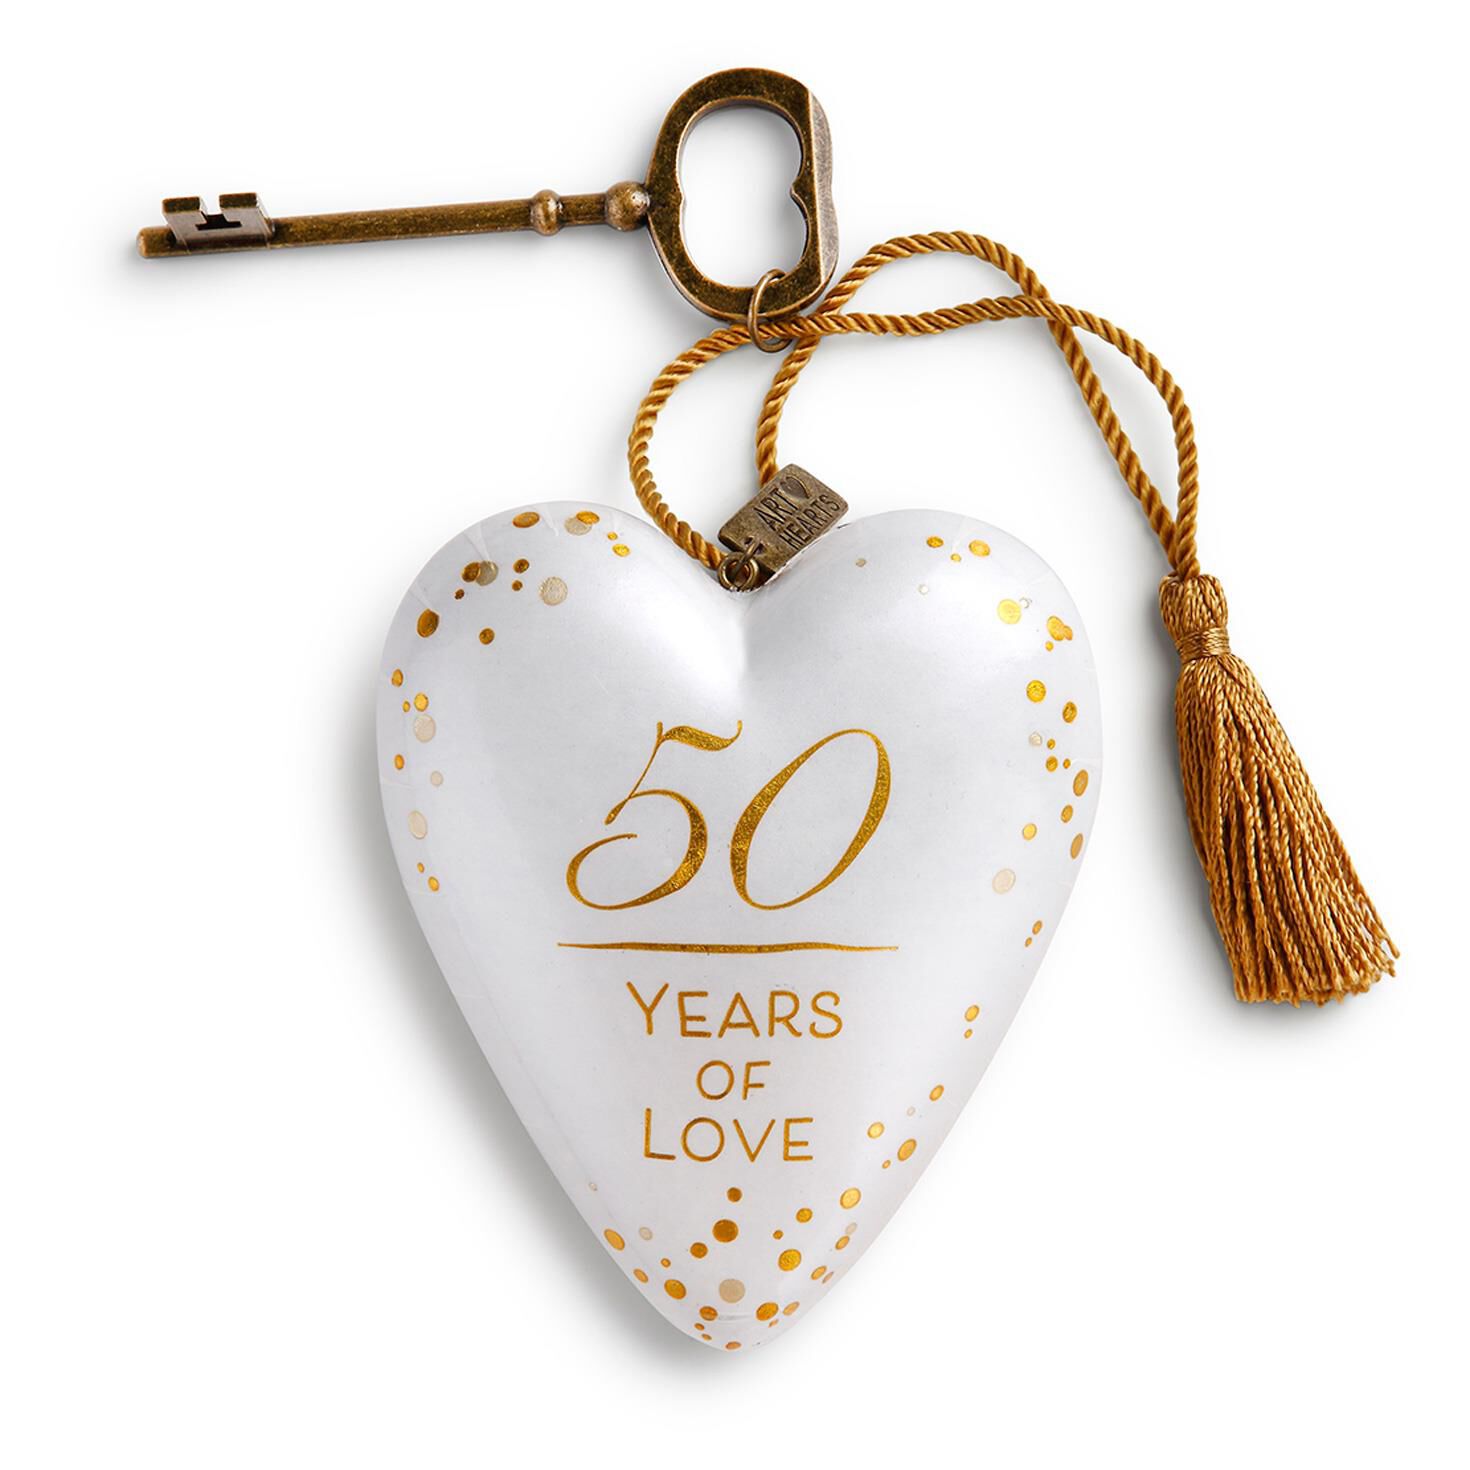 50th wedding anniversary ornament hallmark